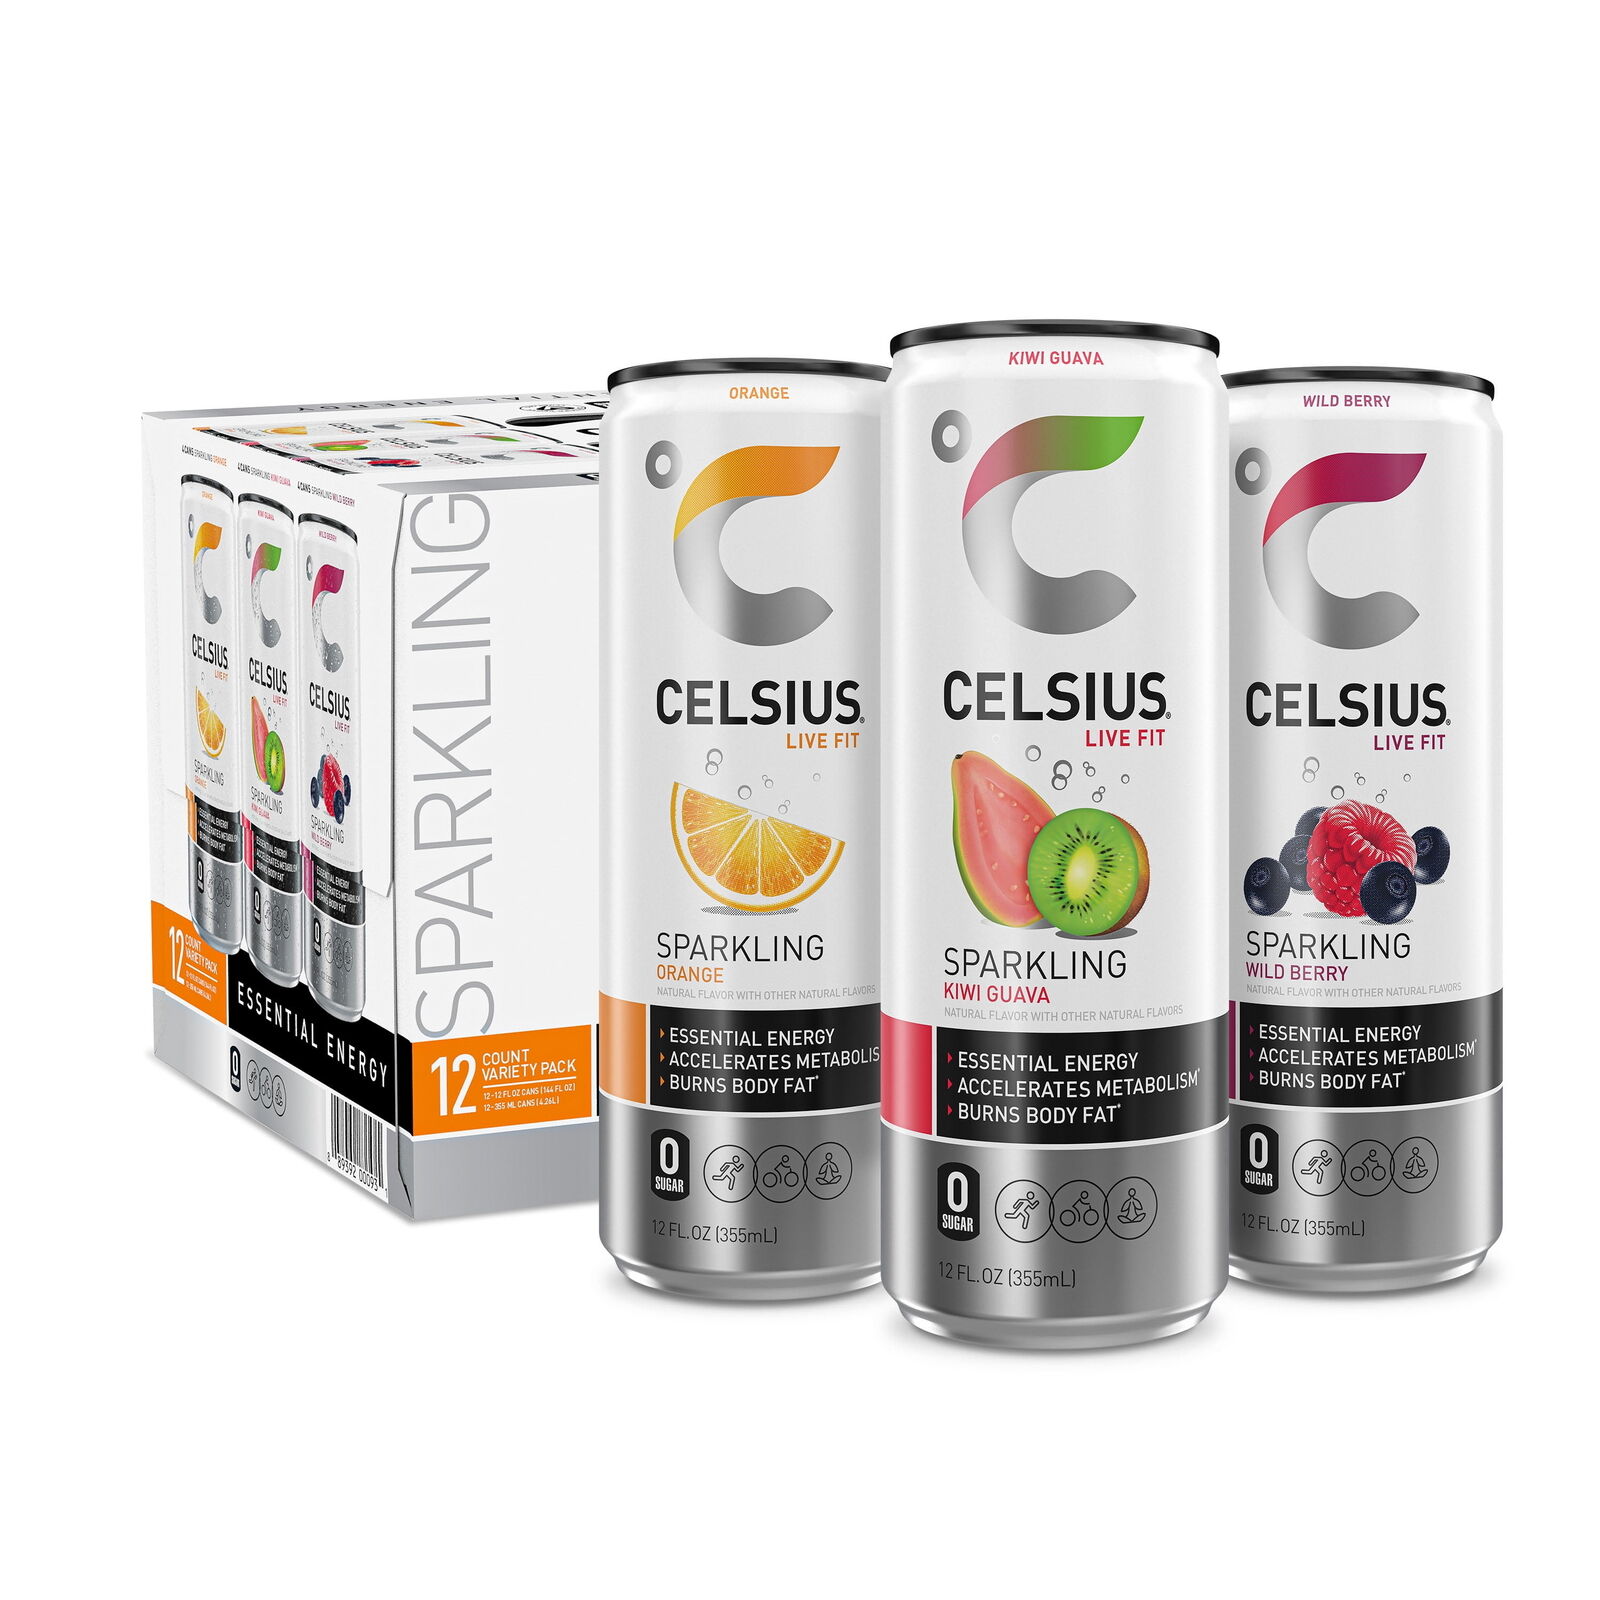 CELSIUS Sparkling Original Variety Pack, Functional Essential Energy Drink